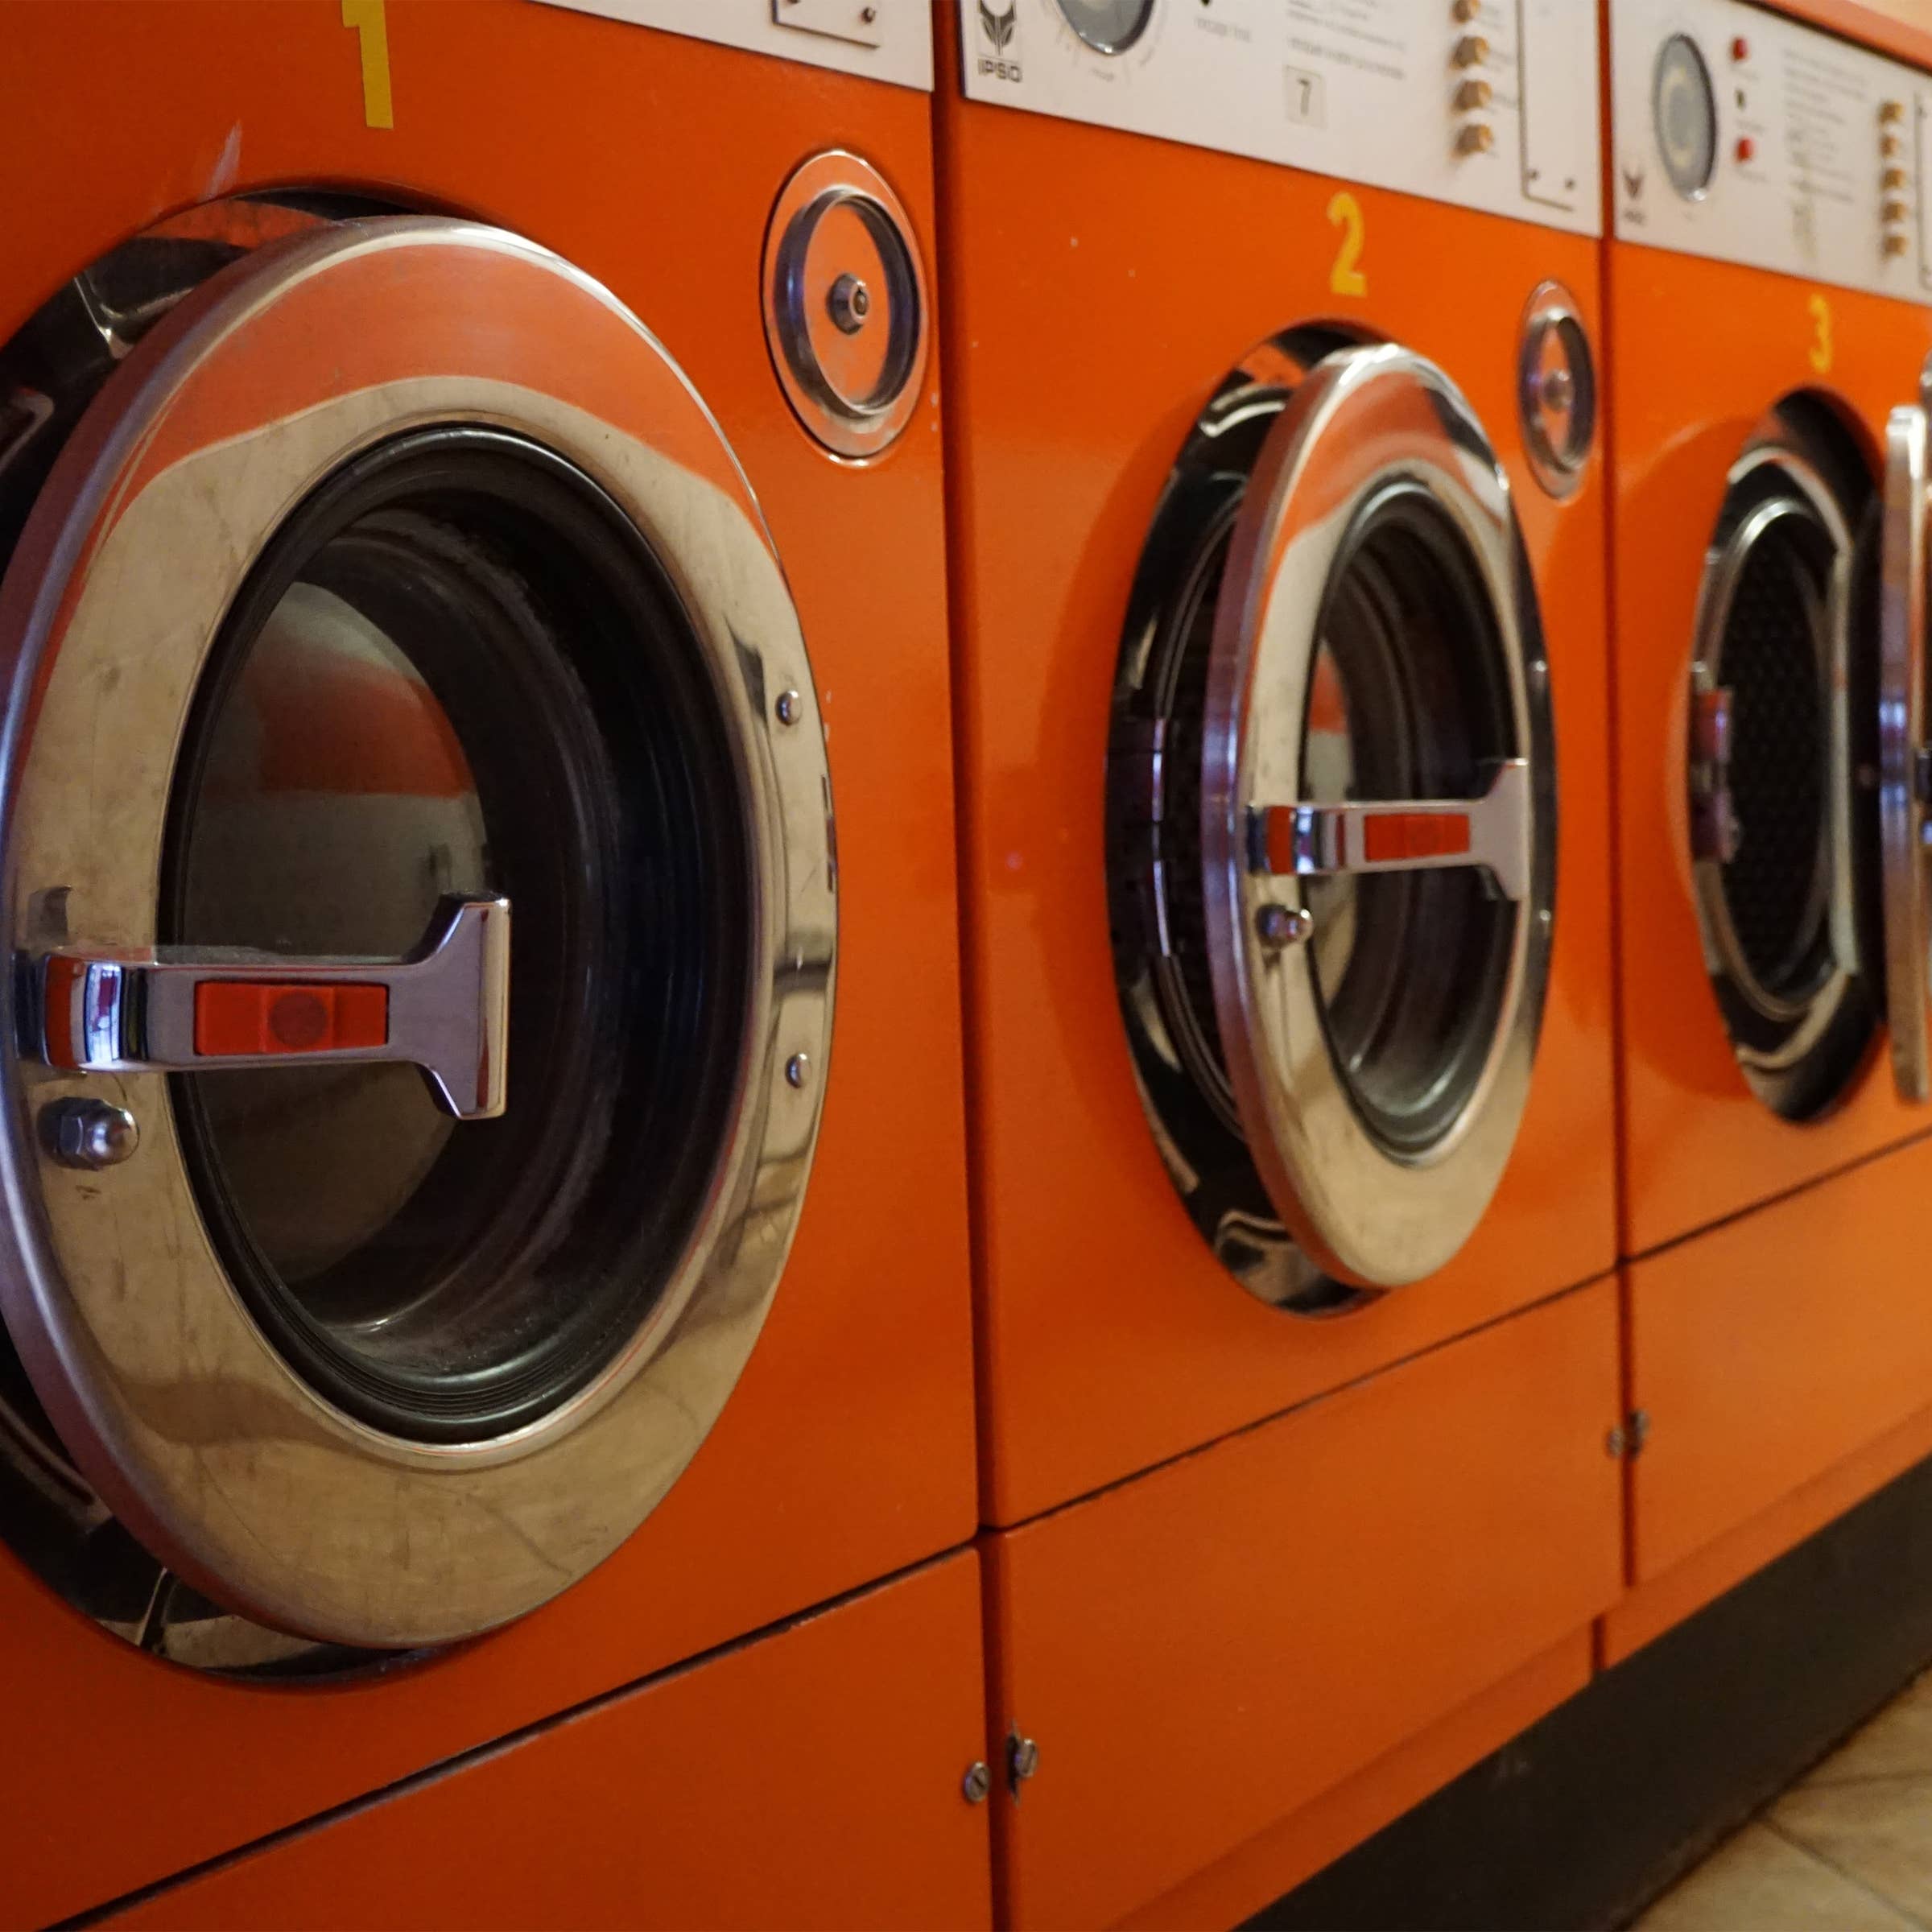 Free Laundromat Business Plan Template